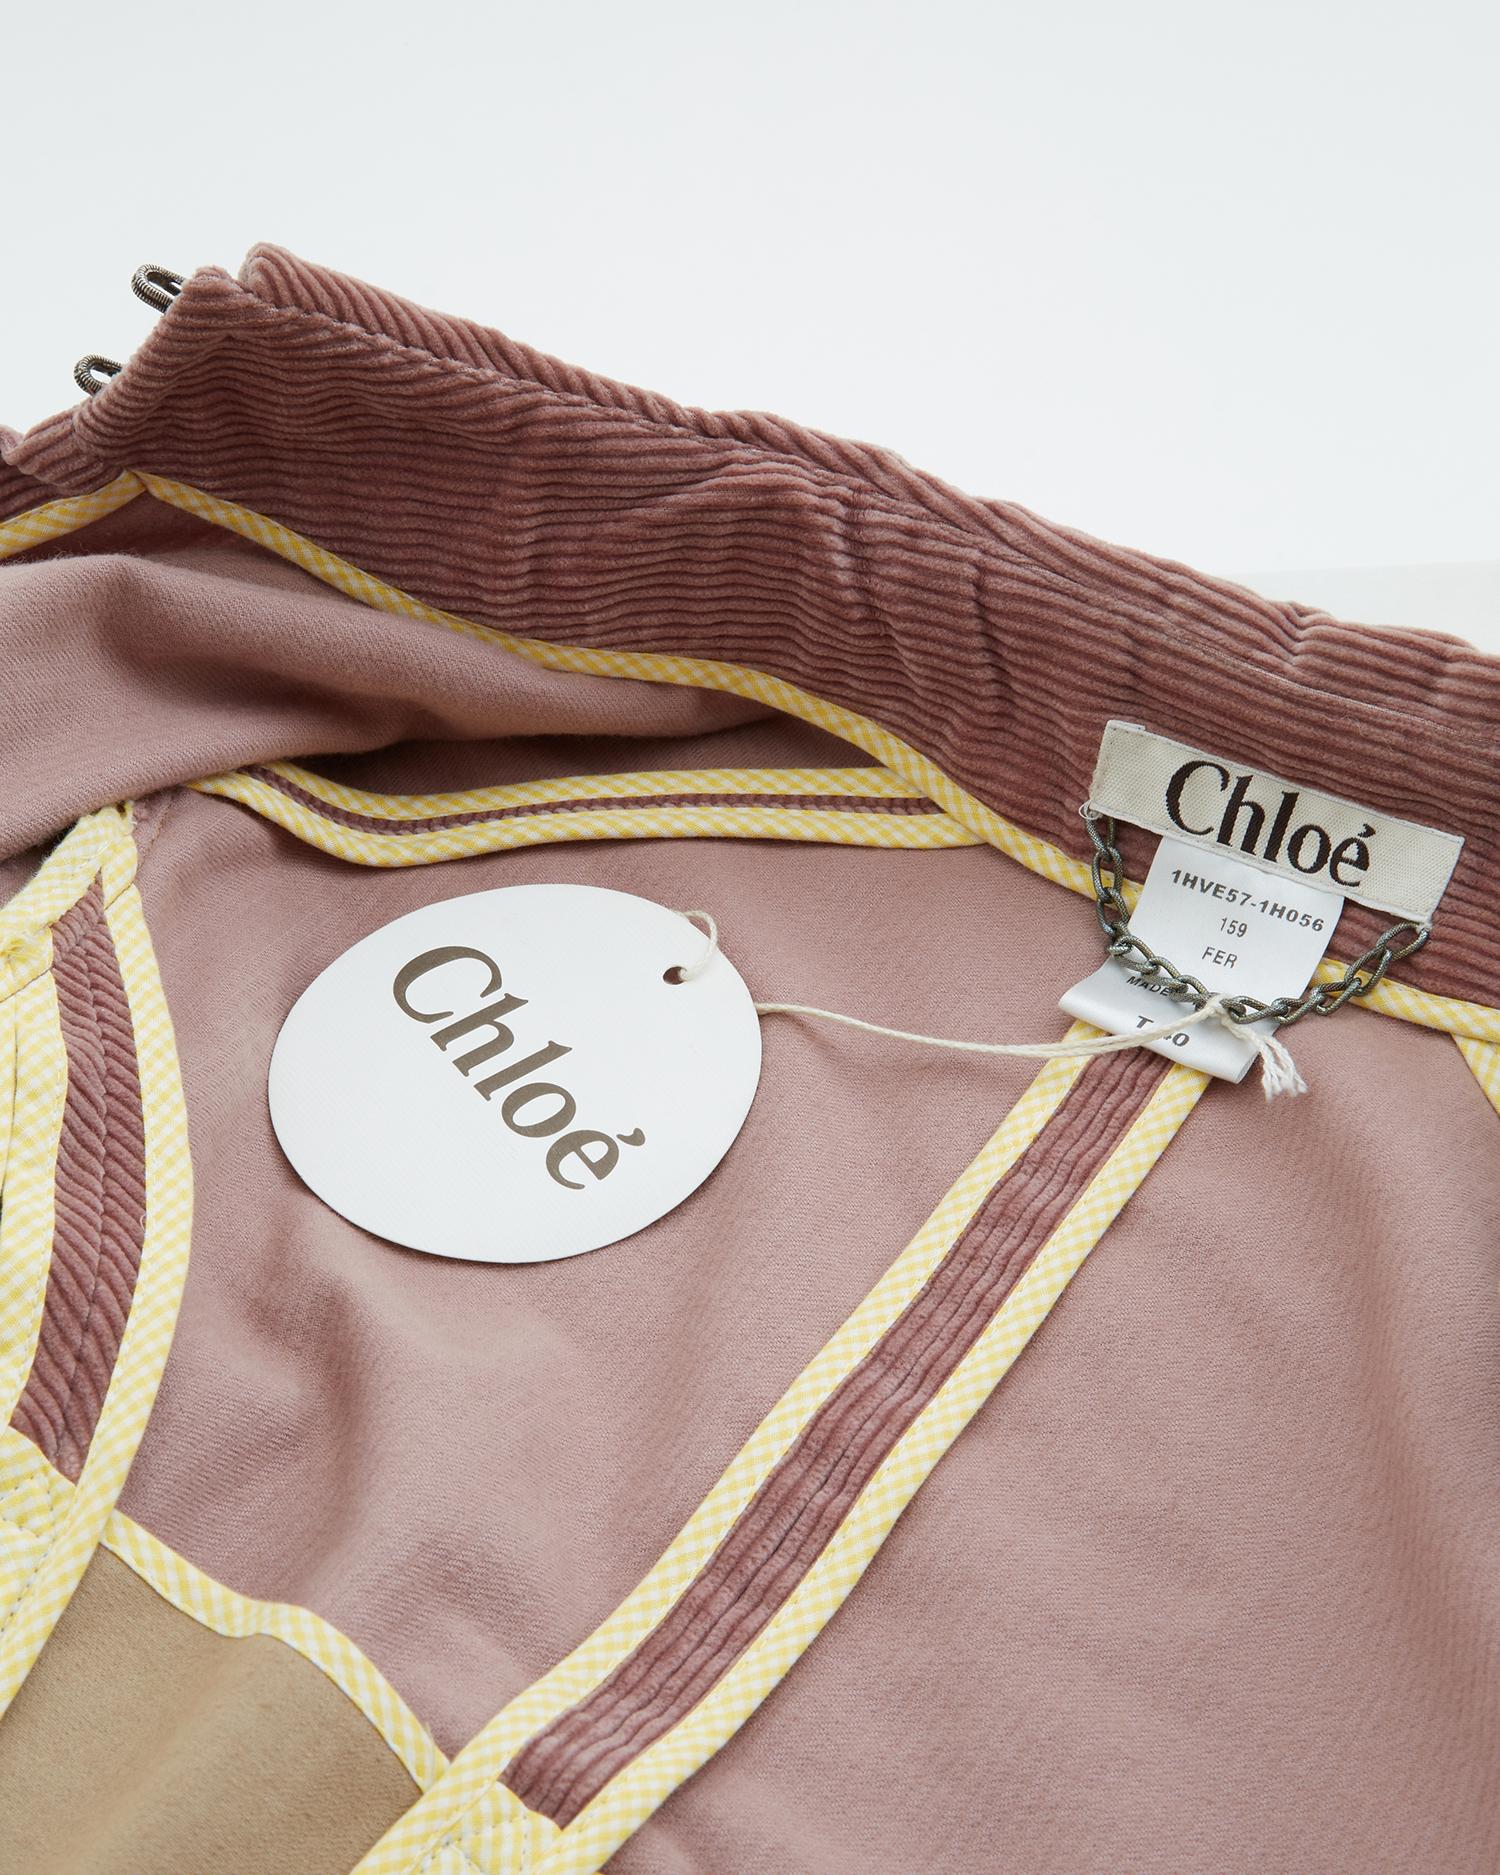 Chloé by Stella McCartney dusky pink corduroy corset jacket, fw 2001  2